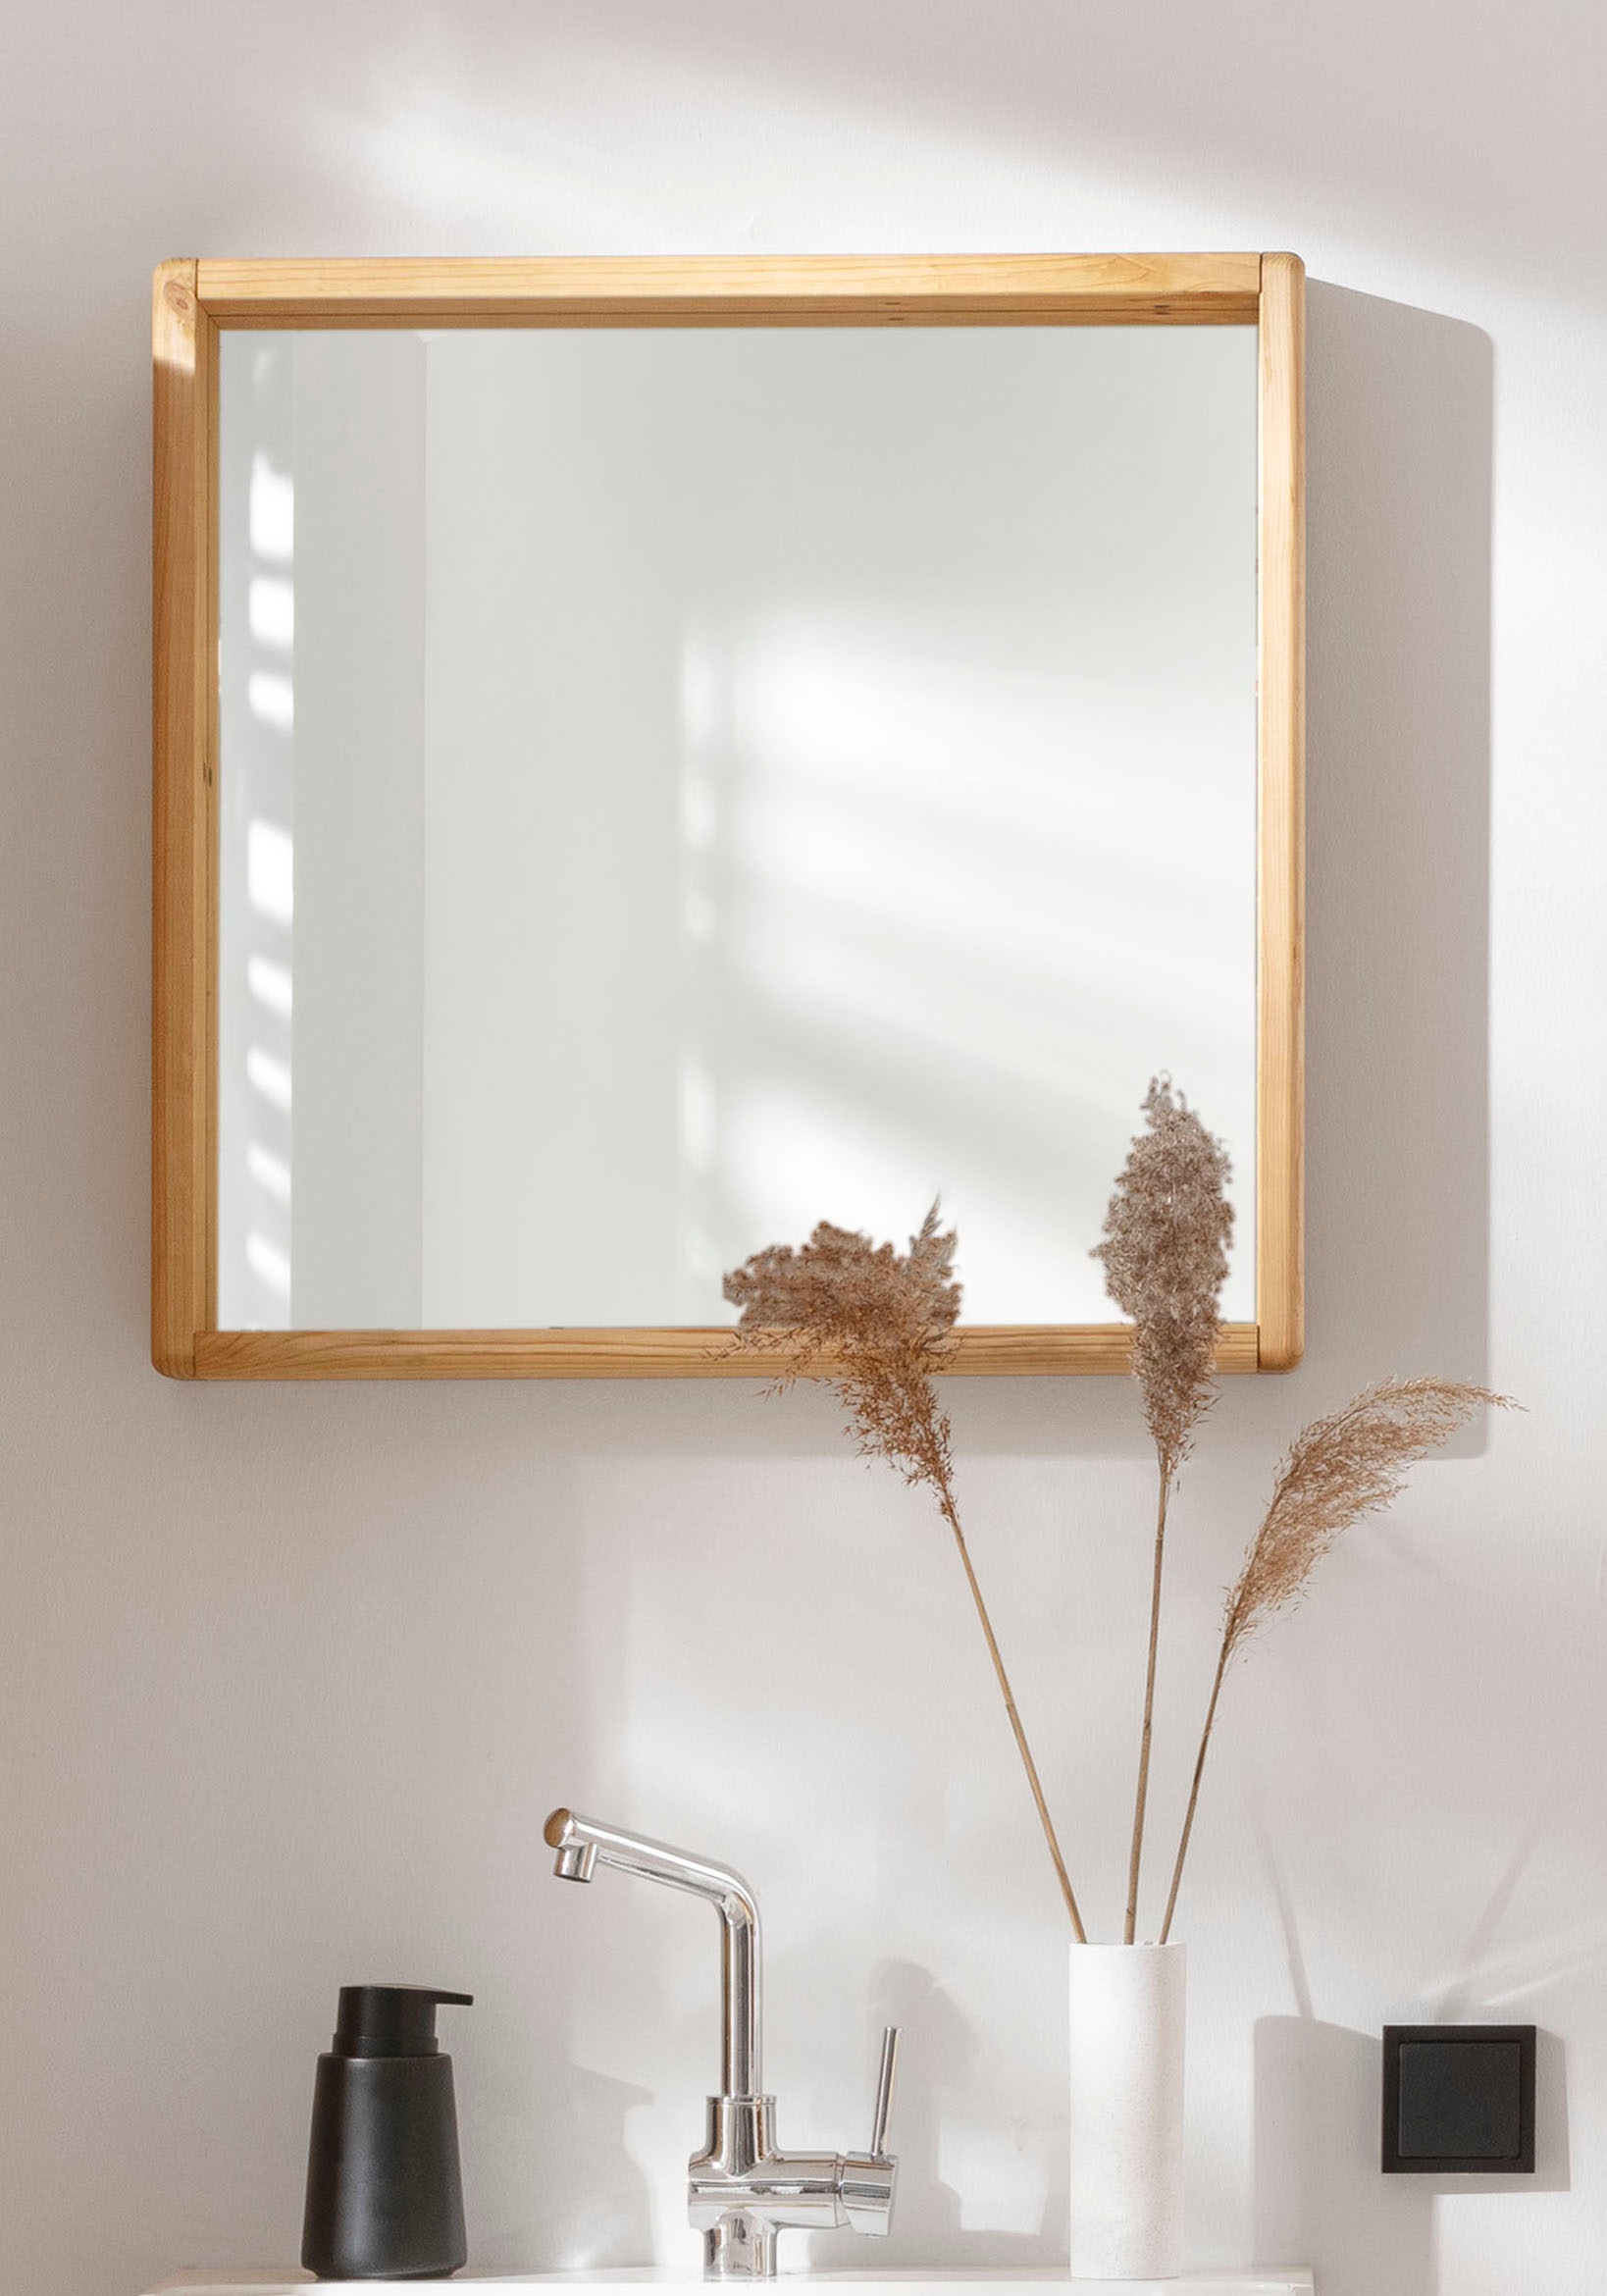 OTTO products Badspiegel »Jorrick«, Rahmen aus FSC-zertifiziertem Massivholz Kiefer, Breite 60 cm